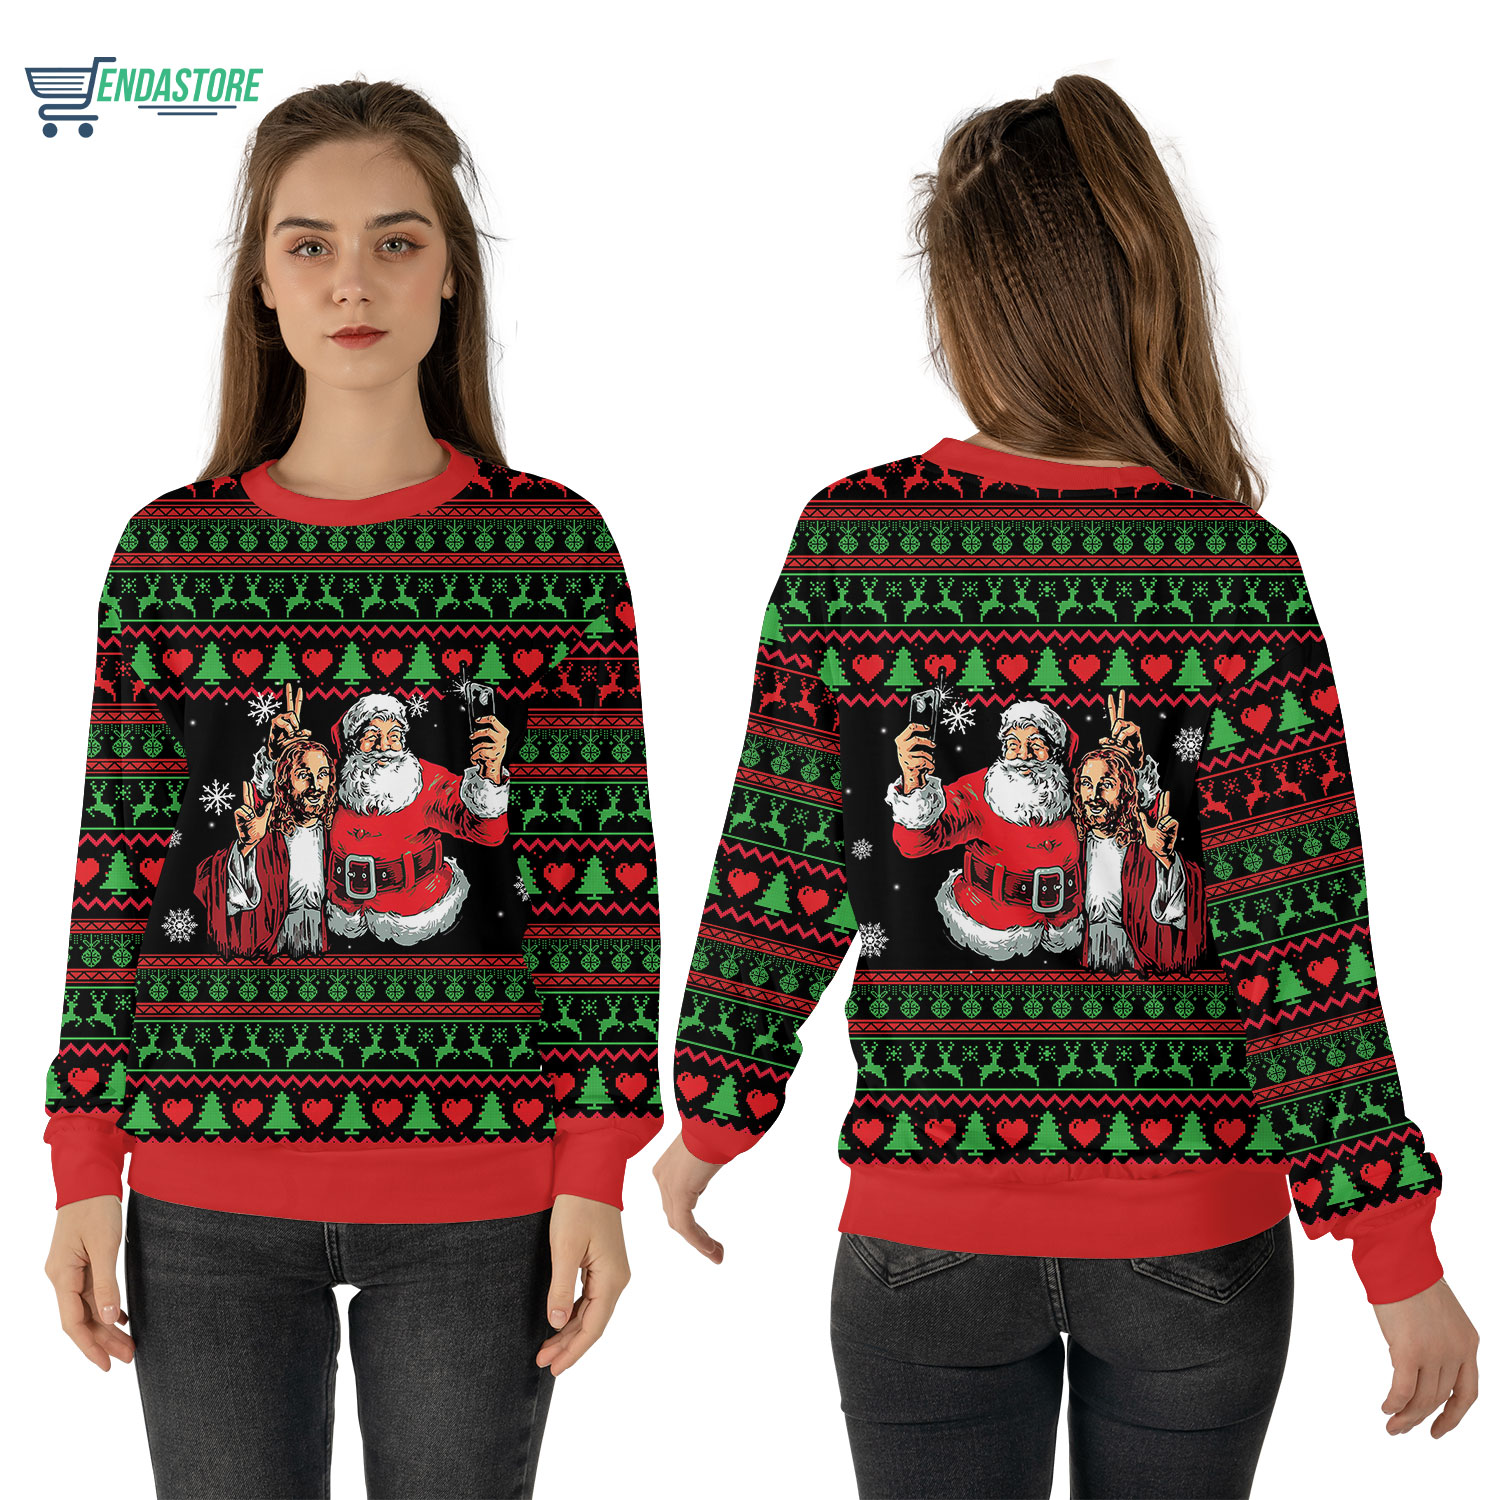 Santa and Jesus Christmas sweater - Endastore.com